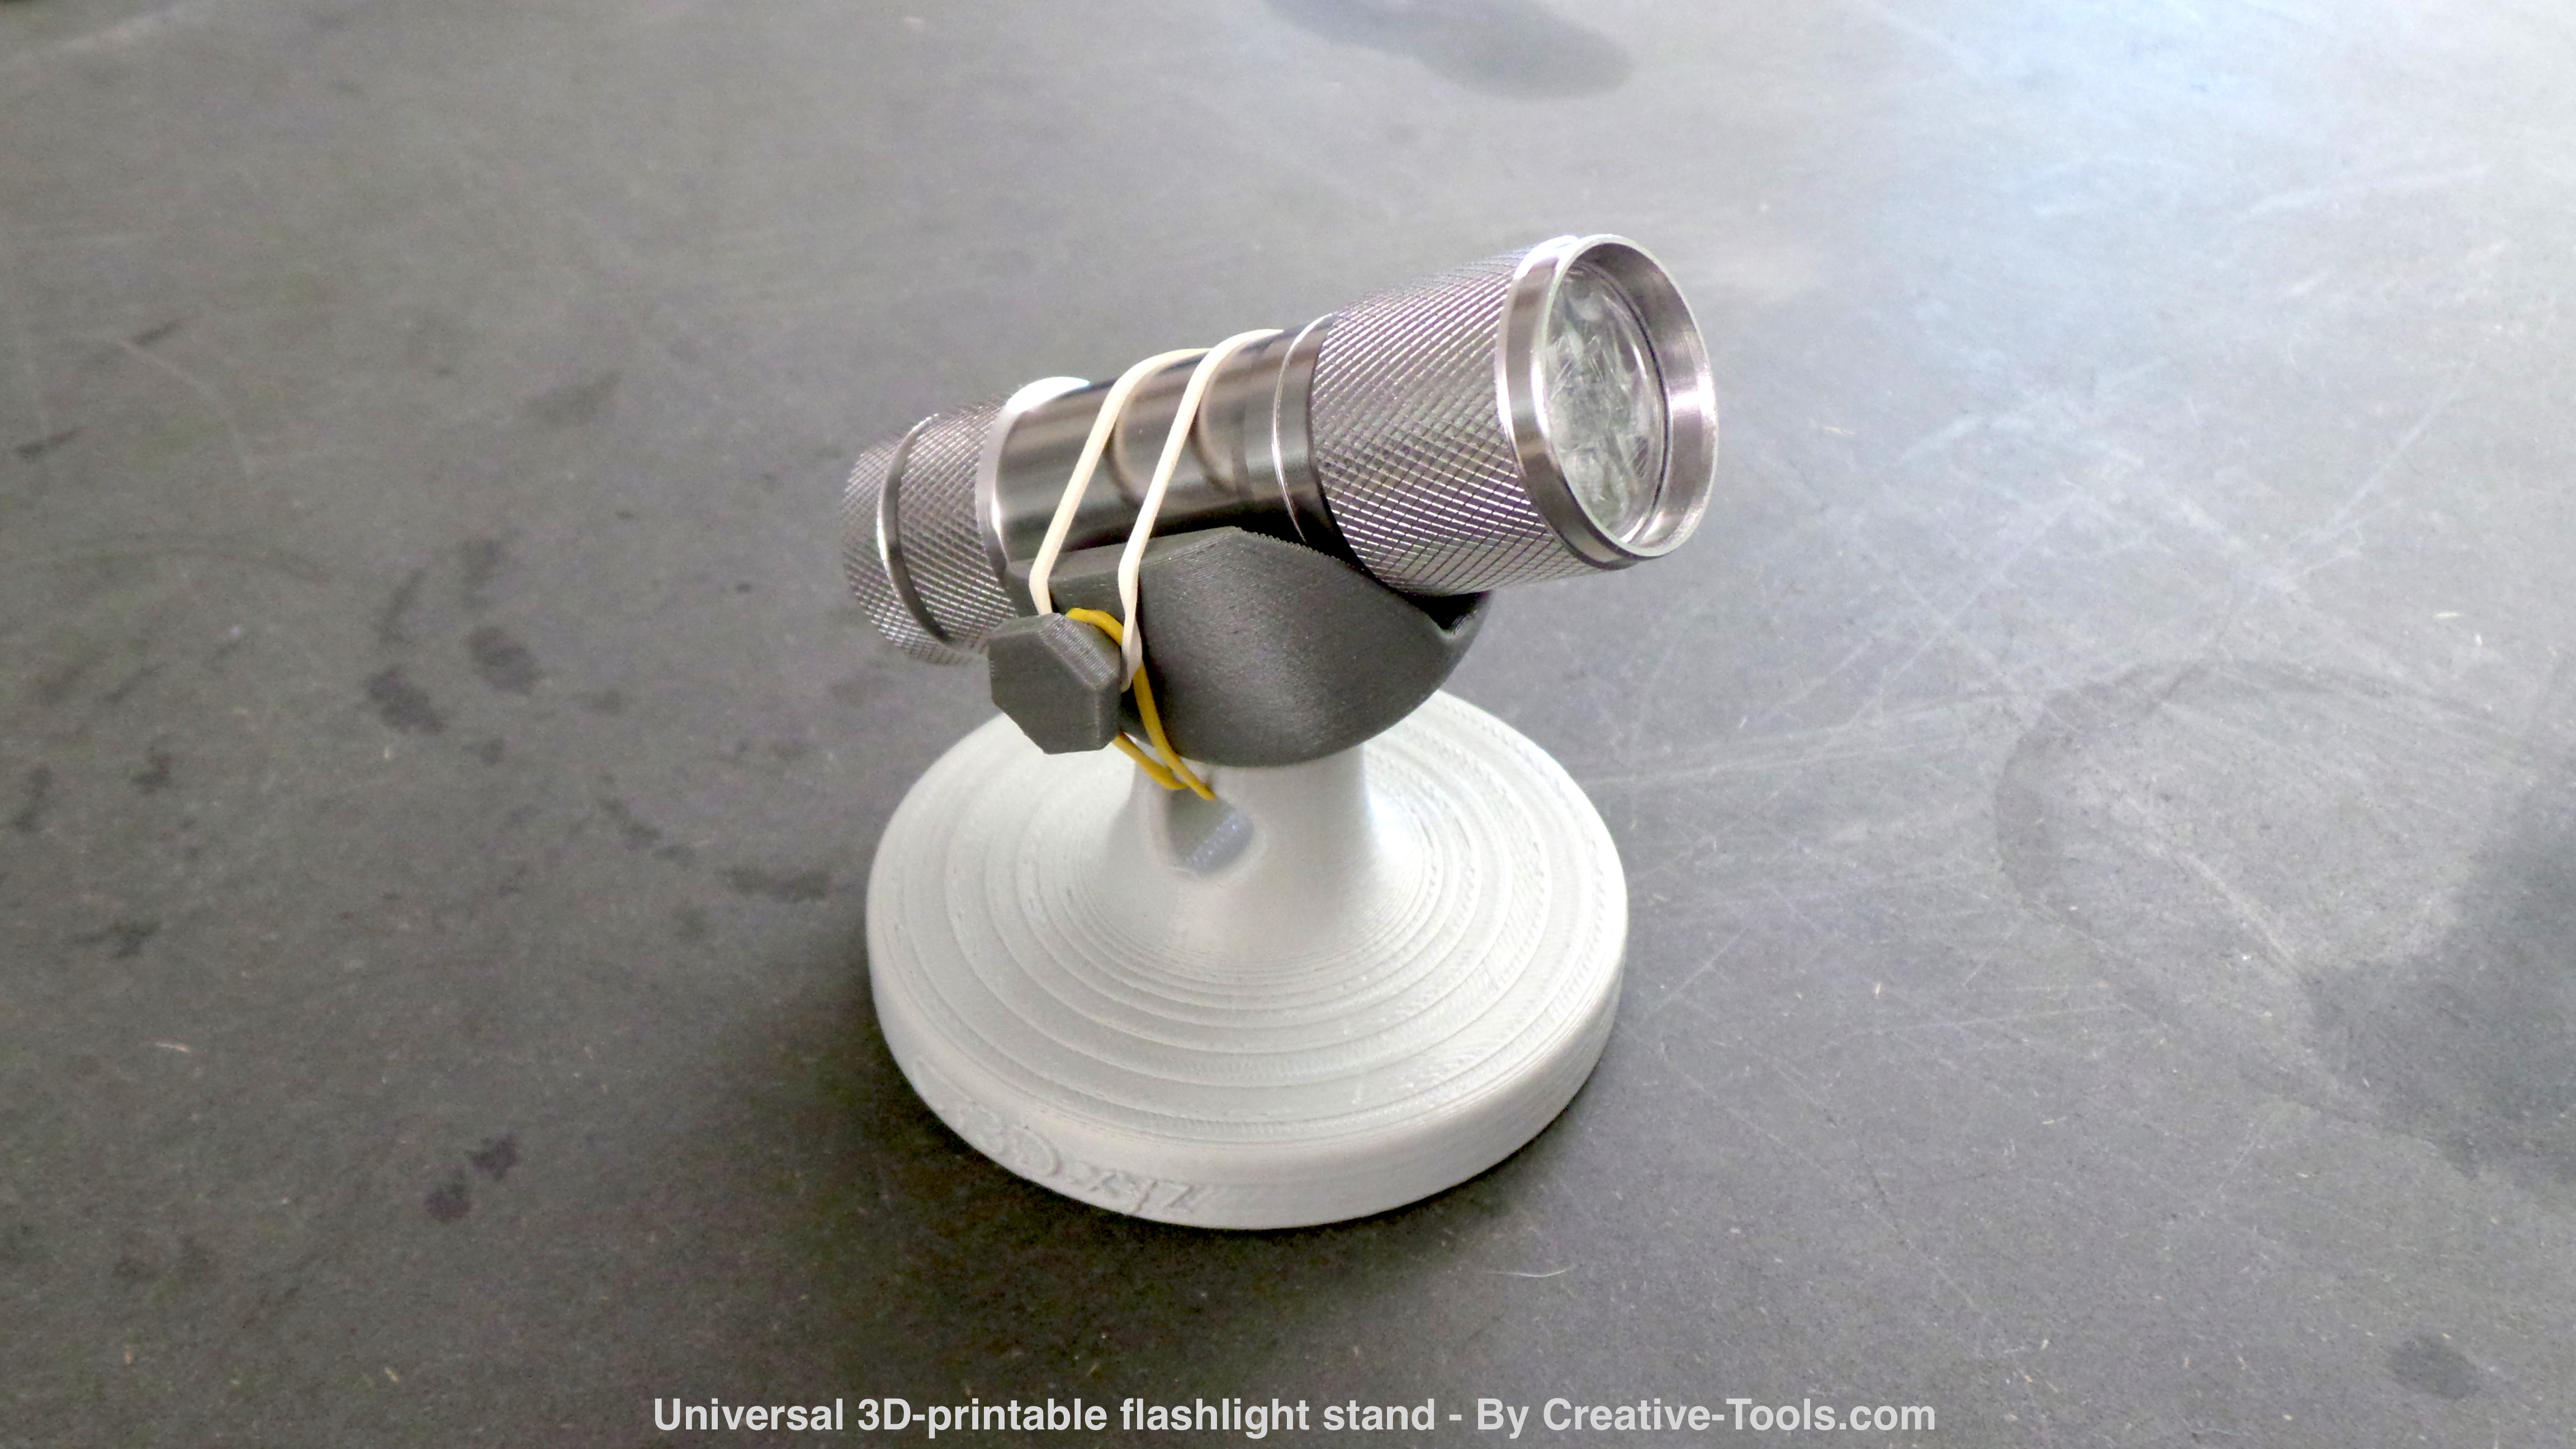 Universal 3Dprintable flashlight stand 3D Printers Talk